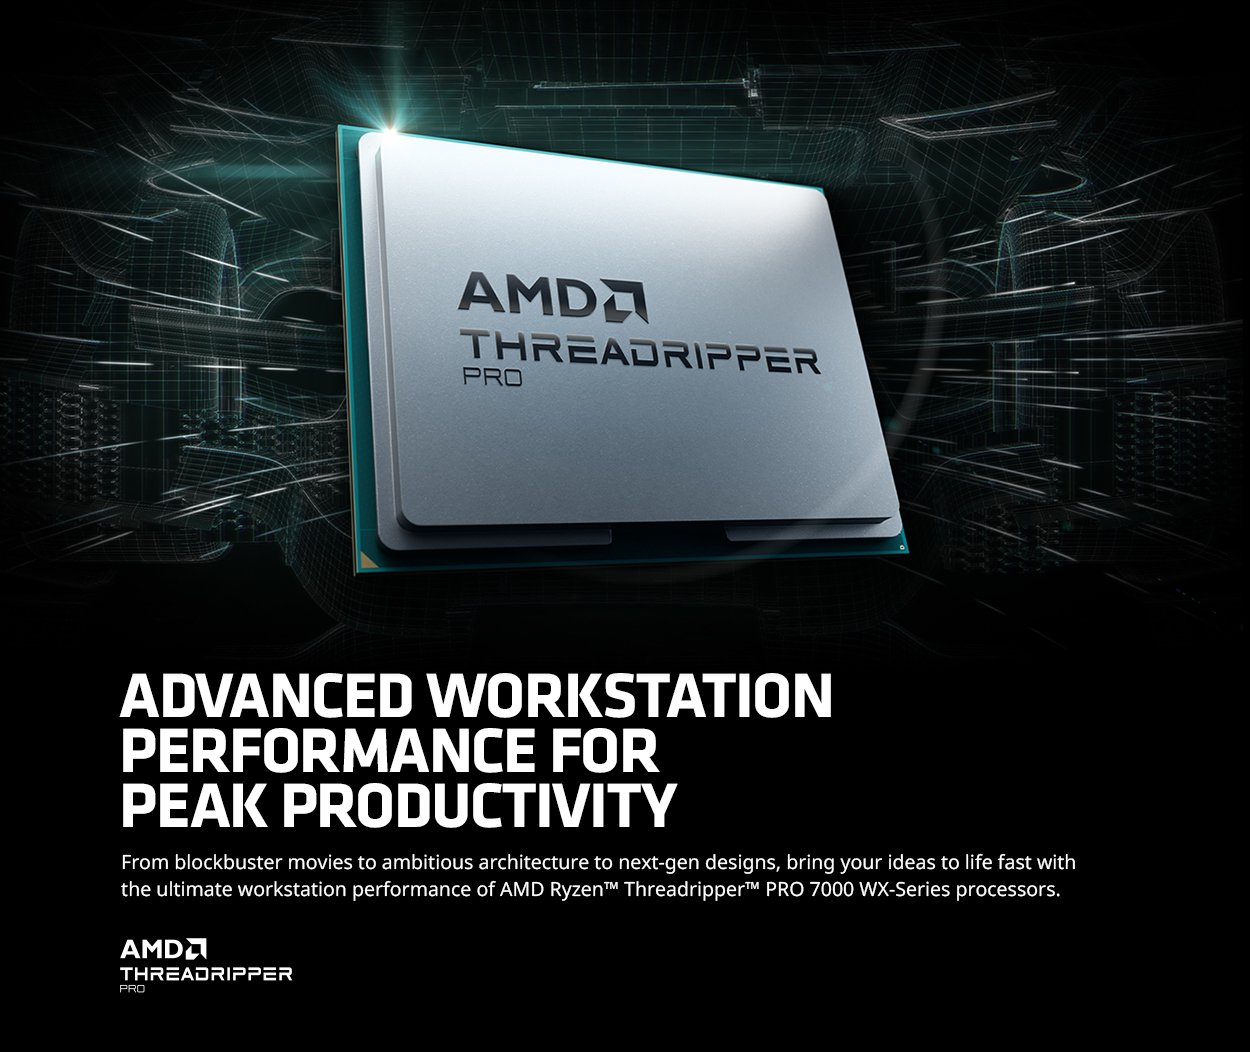 AMD Threadripper Pro 7000 Series Processors